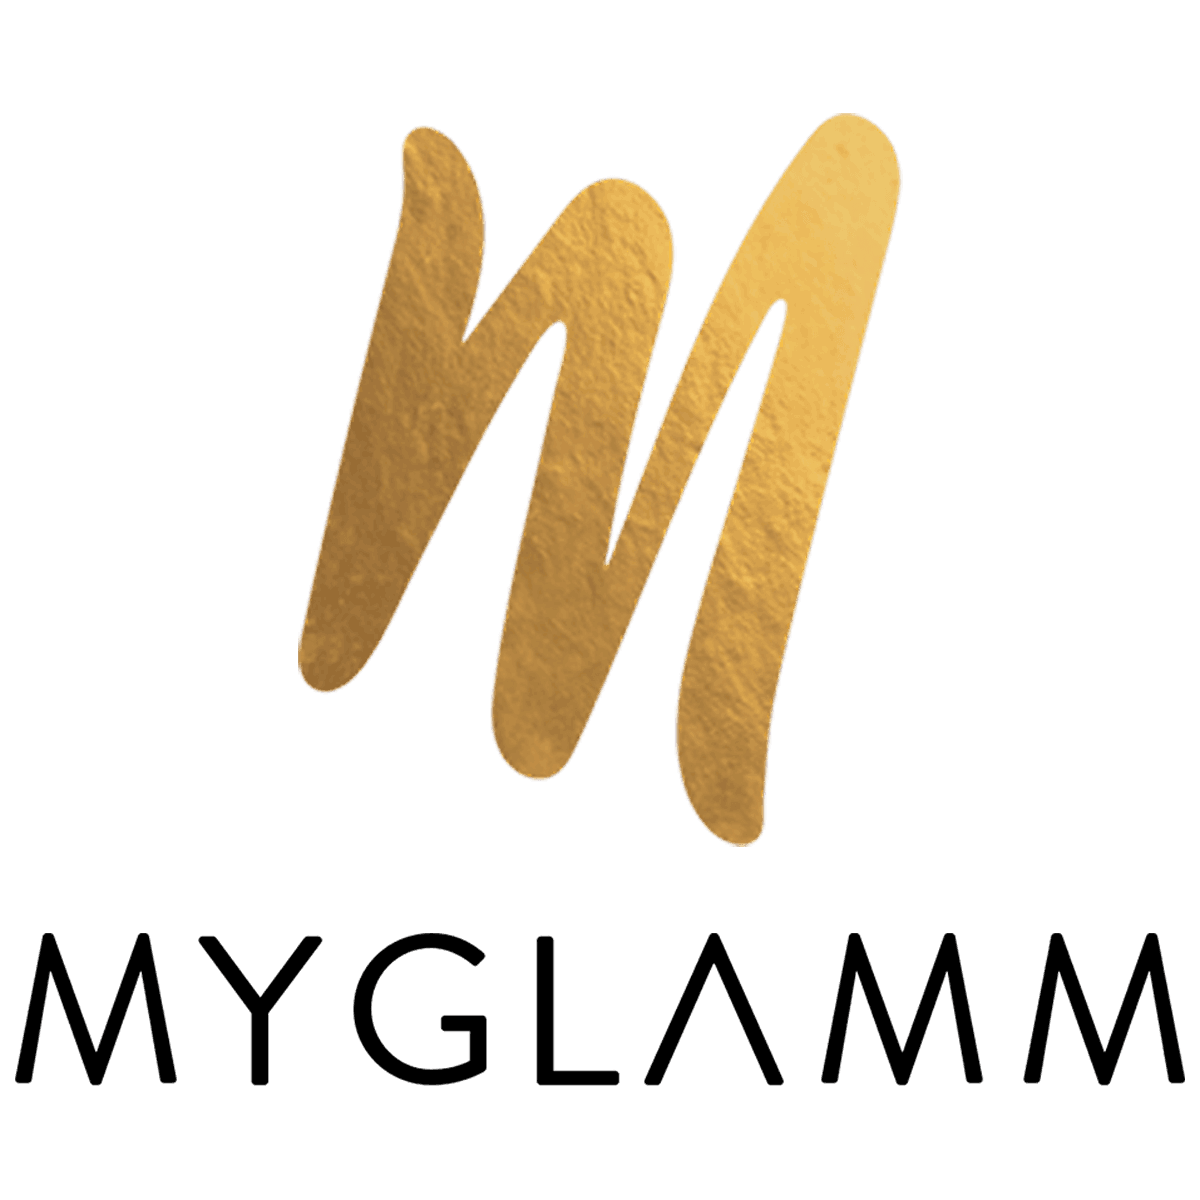 MyGlamm logo